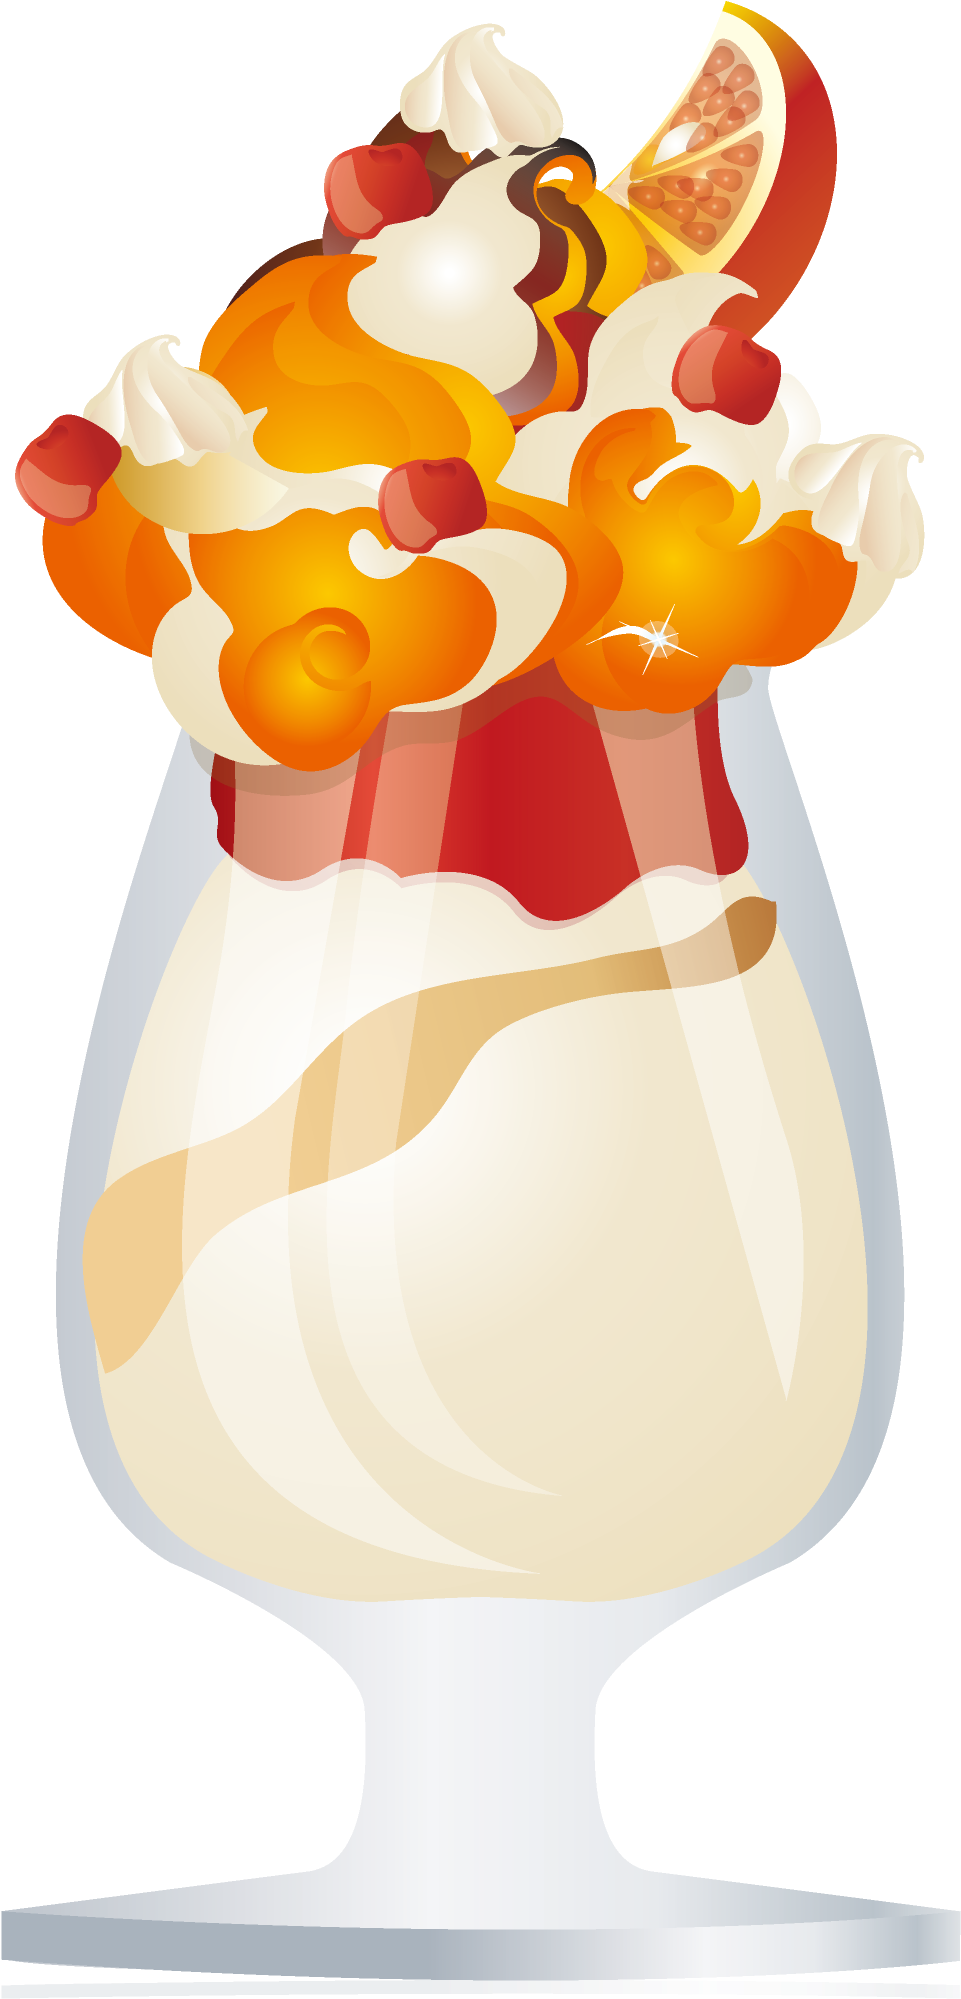 水果冰淇淋 - Ice Cream (1361x2435)